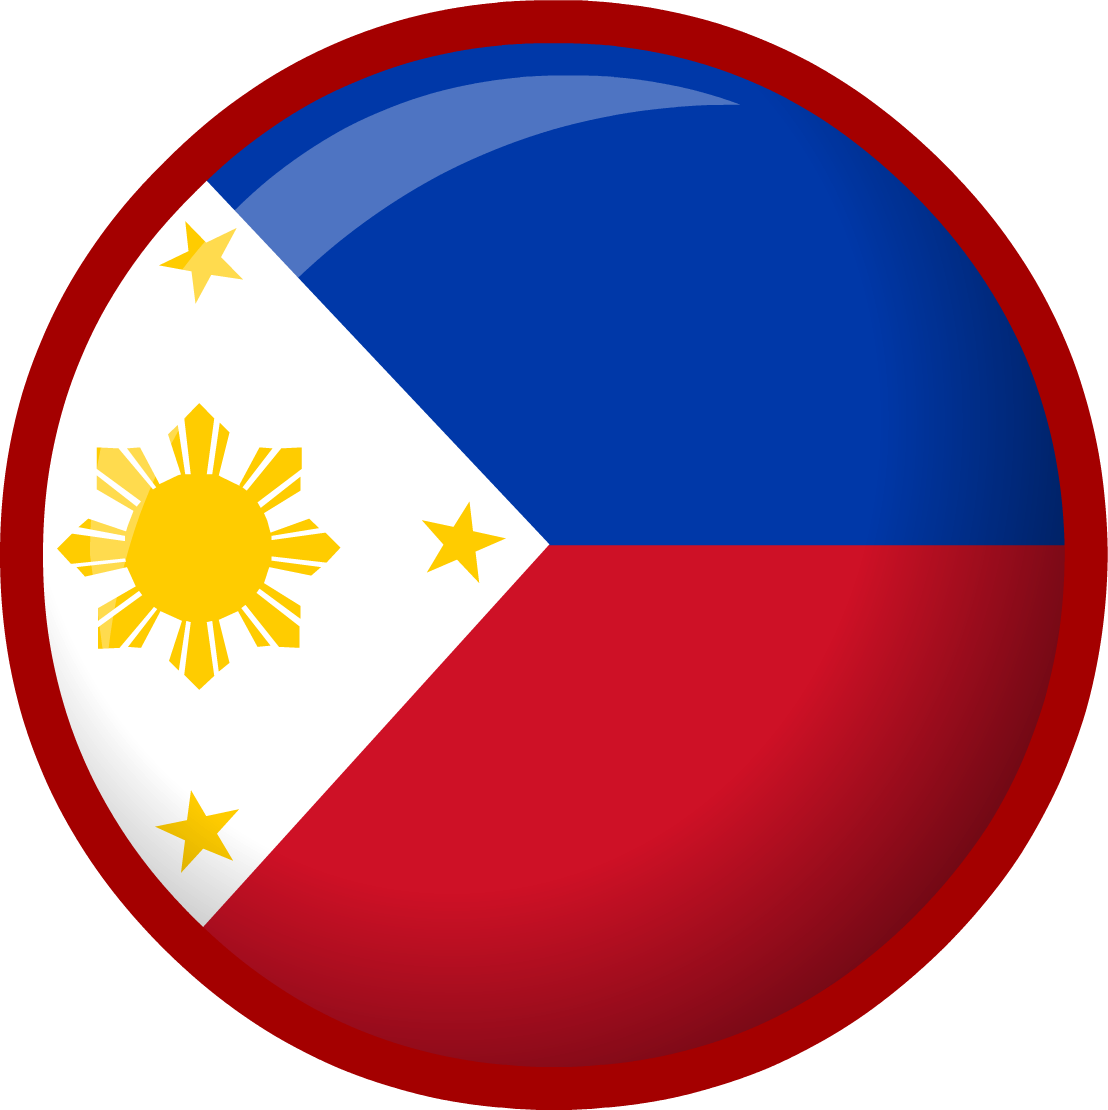 Philippines flag | Club Penguin Wiki | Fandom powered by Wikia